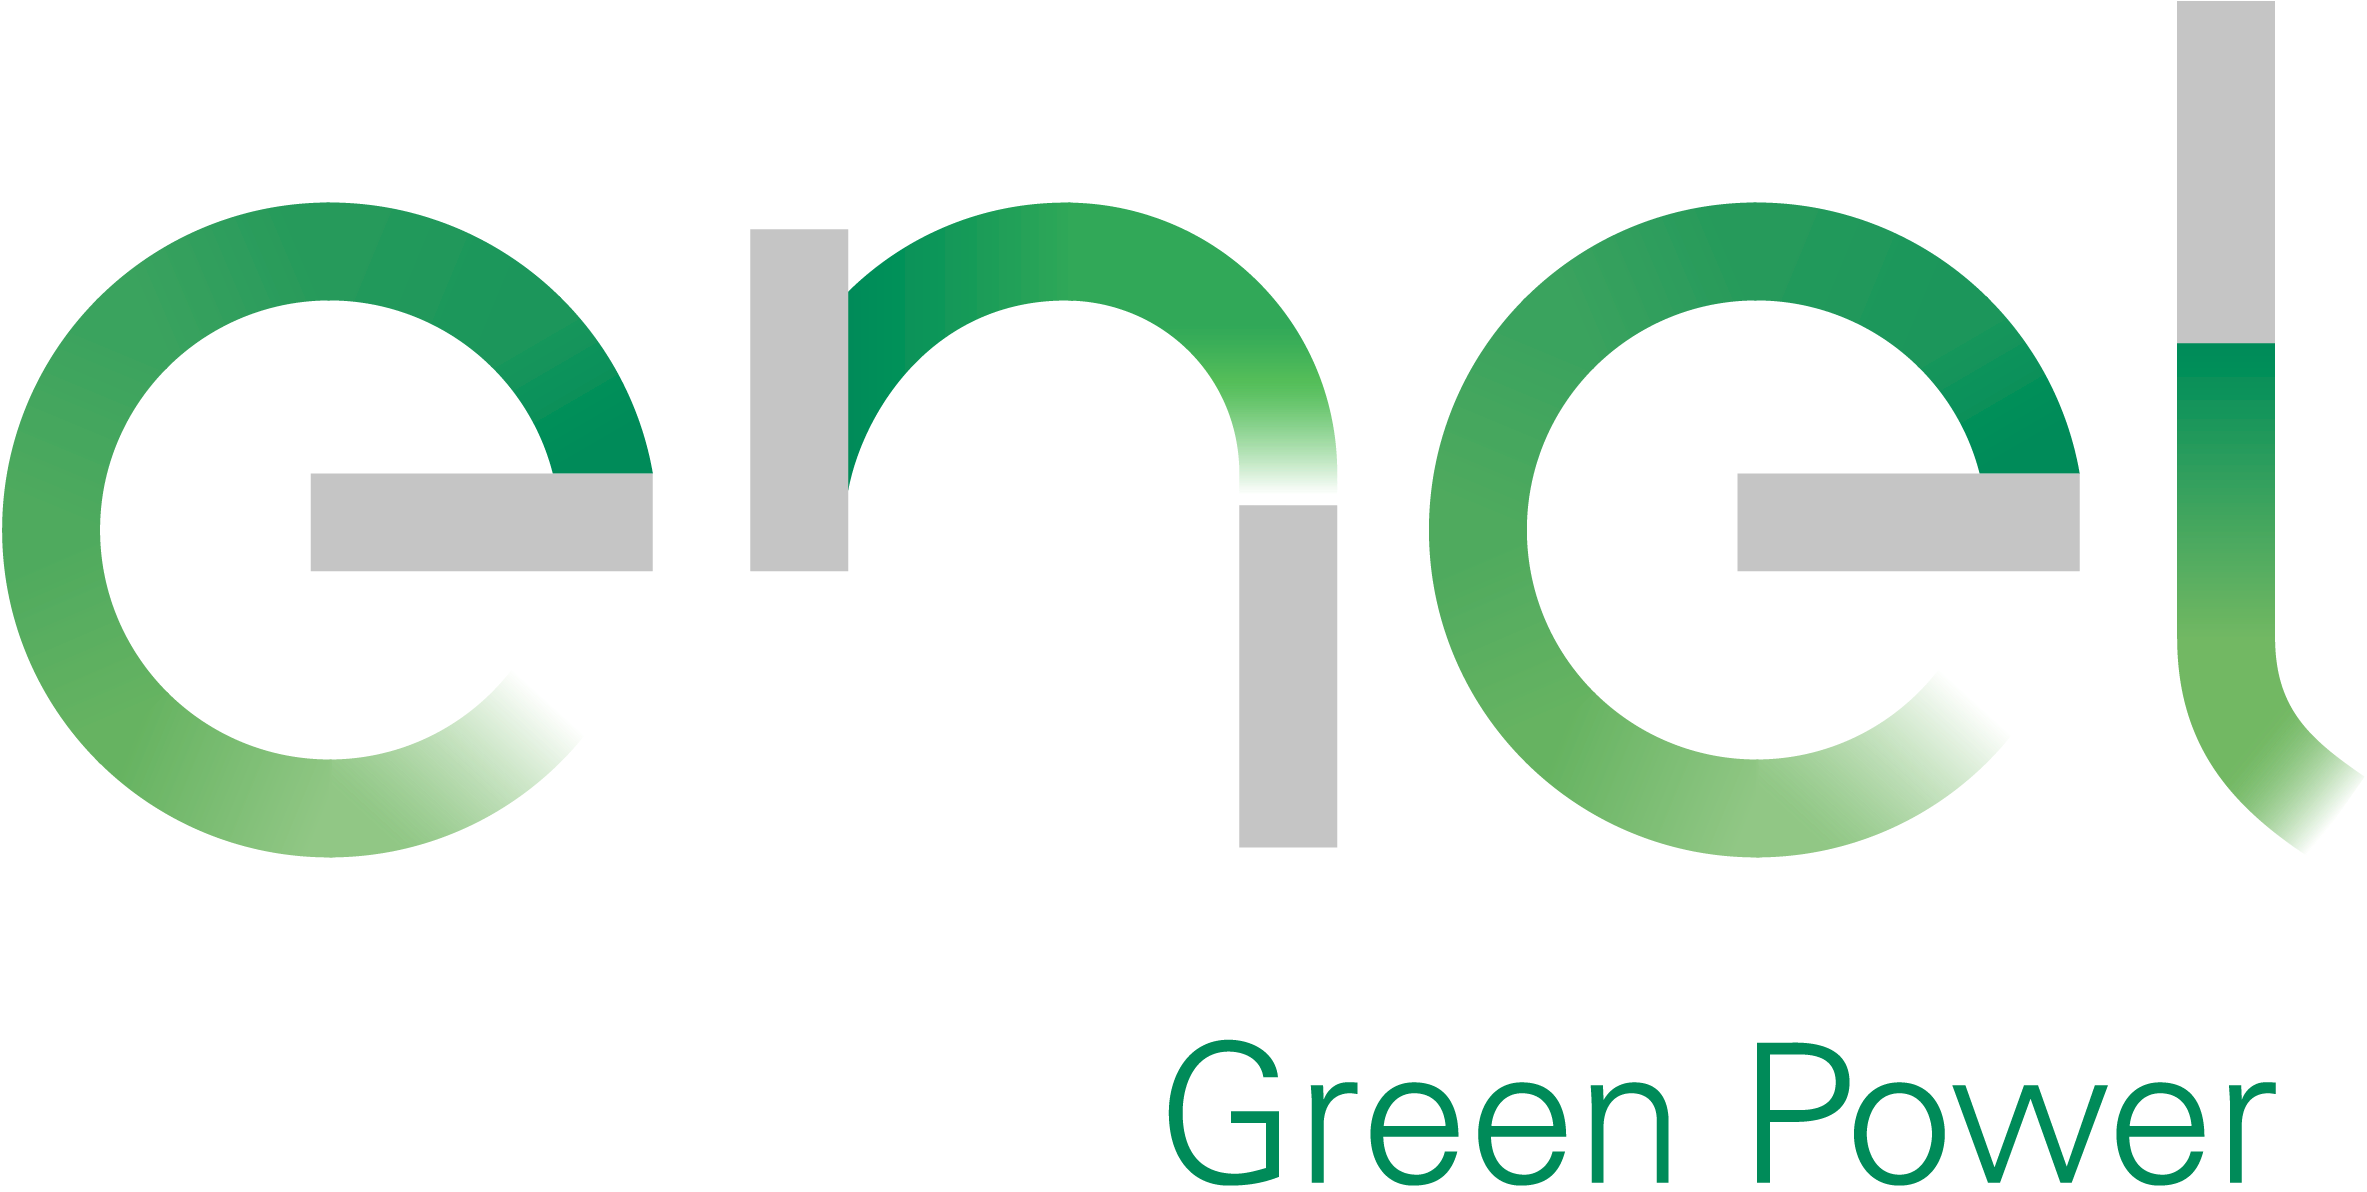 Enel Green Power Guatemala